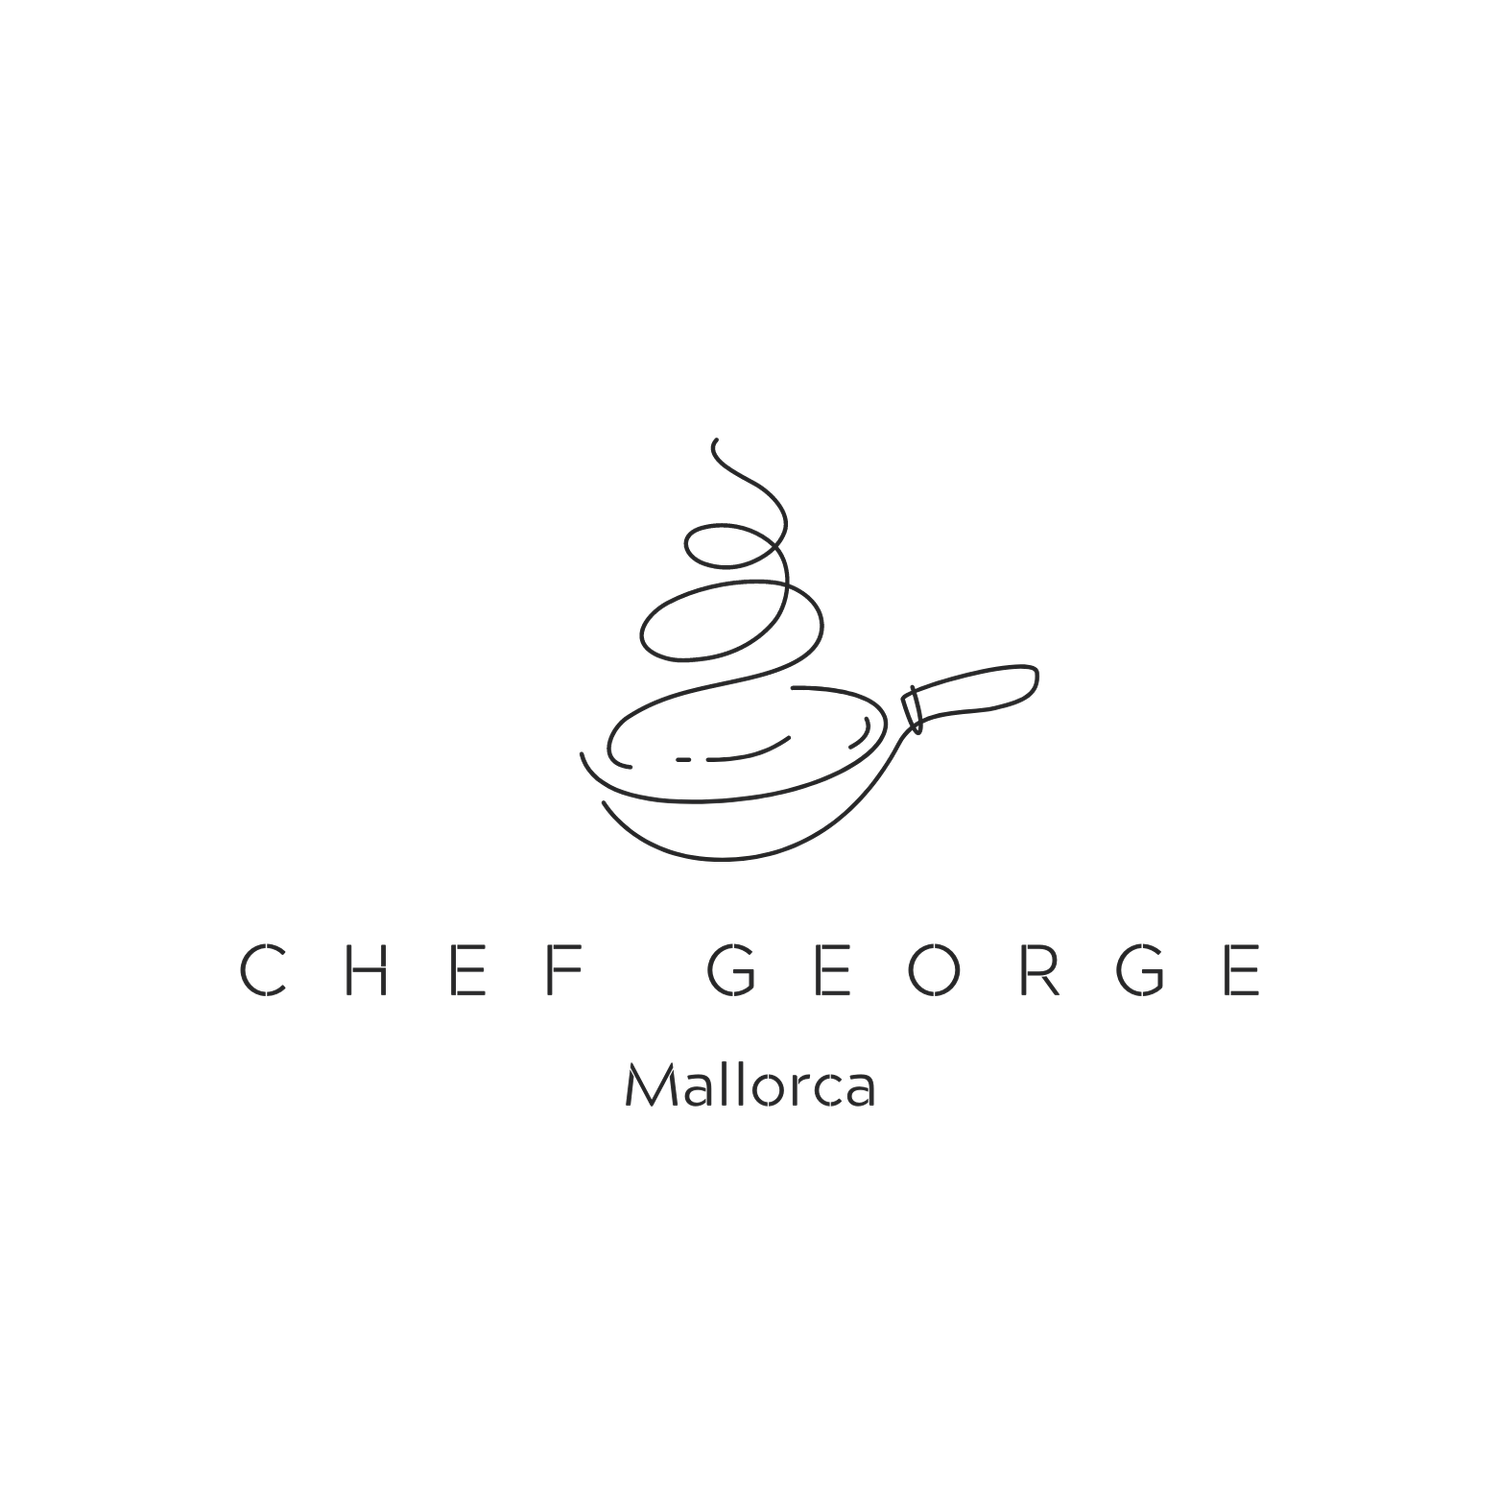 Chef George